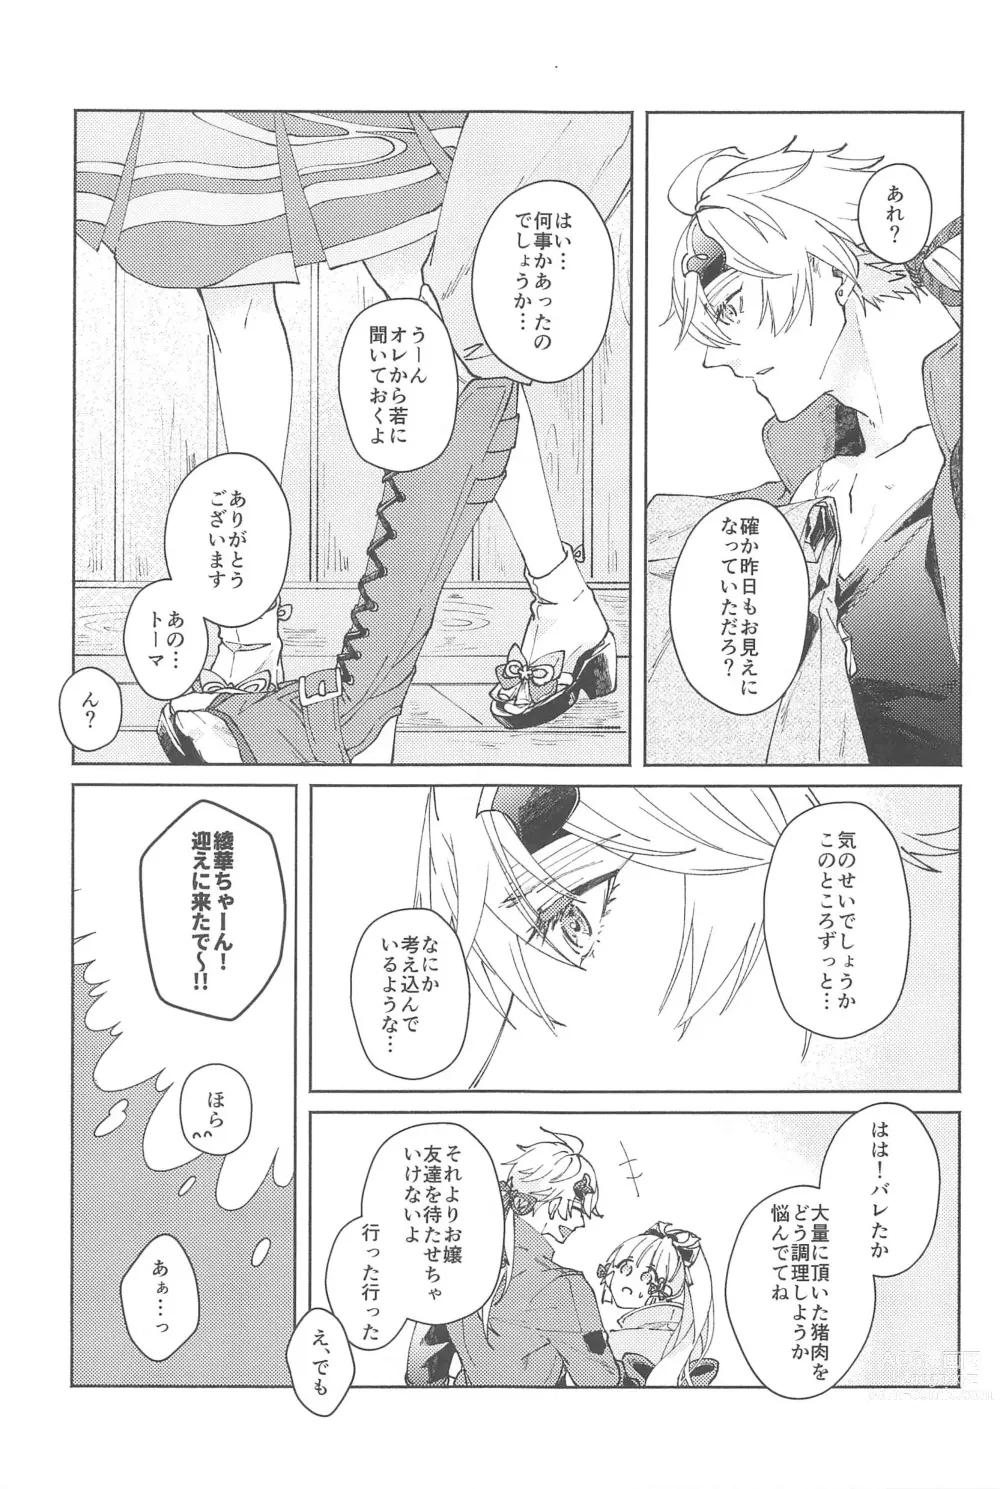 Page 12 of doujinshi Zenbu Kimi no Mono